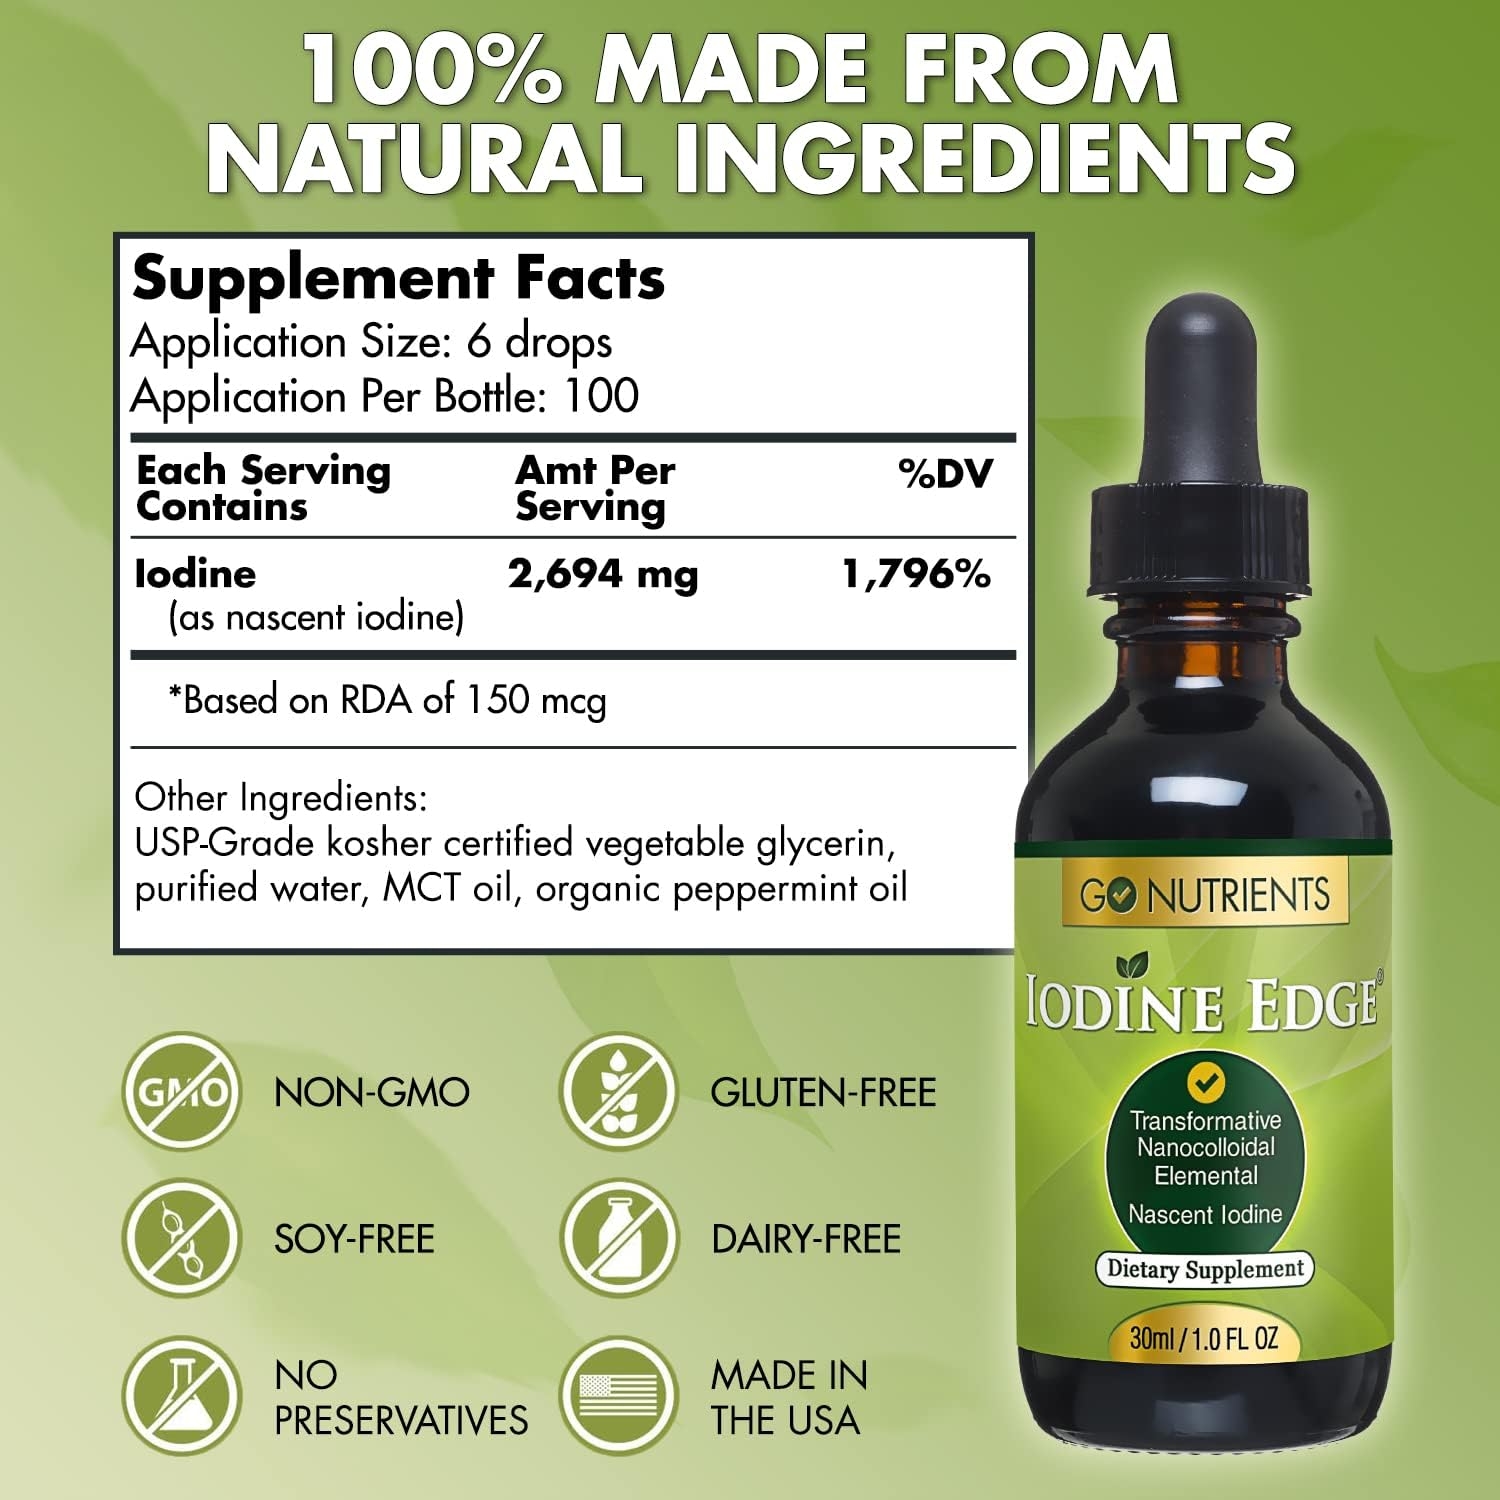 Go Nutrients Nascent Iodine Supplement - High Potency Liquid Drops - Non-GMO, Gluten-Free Iodine Edge Supplement - 30 ml (1.0 fl oz)